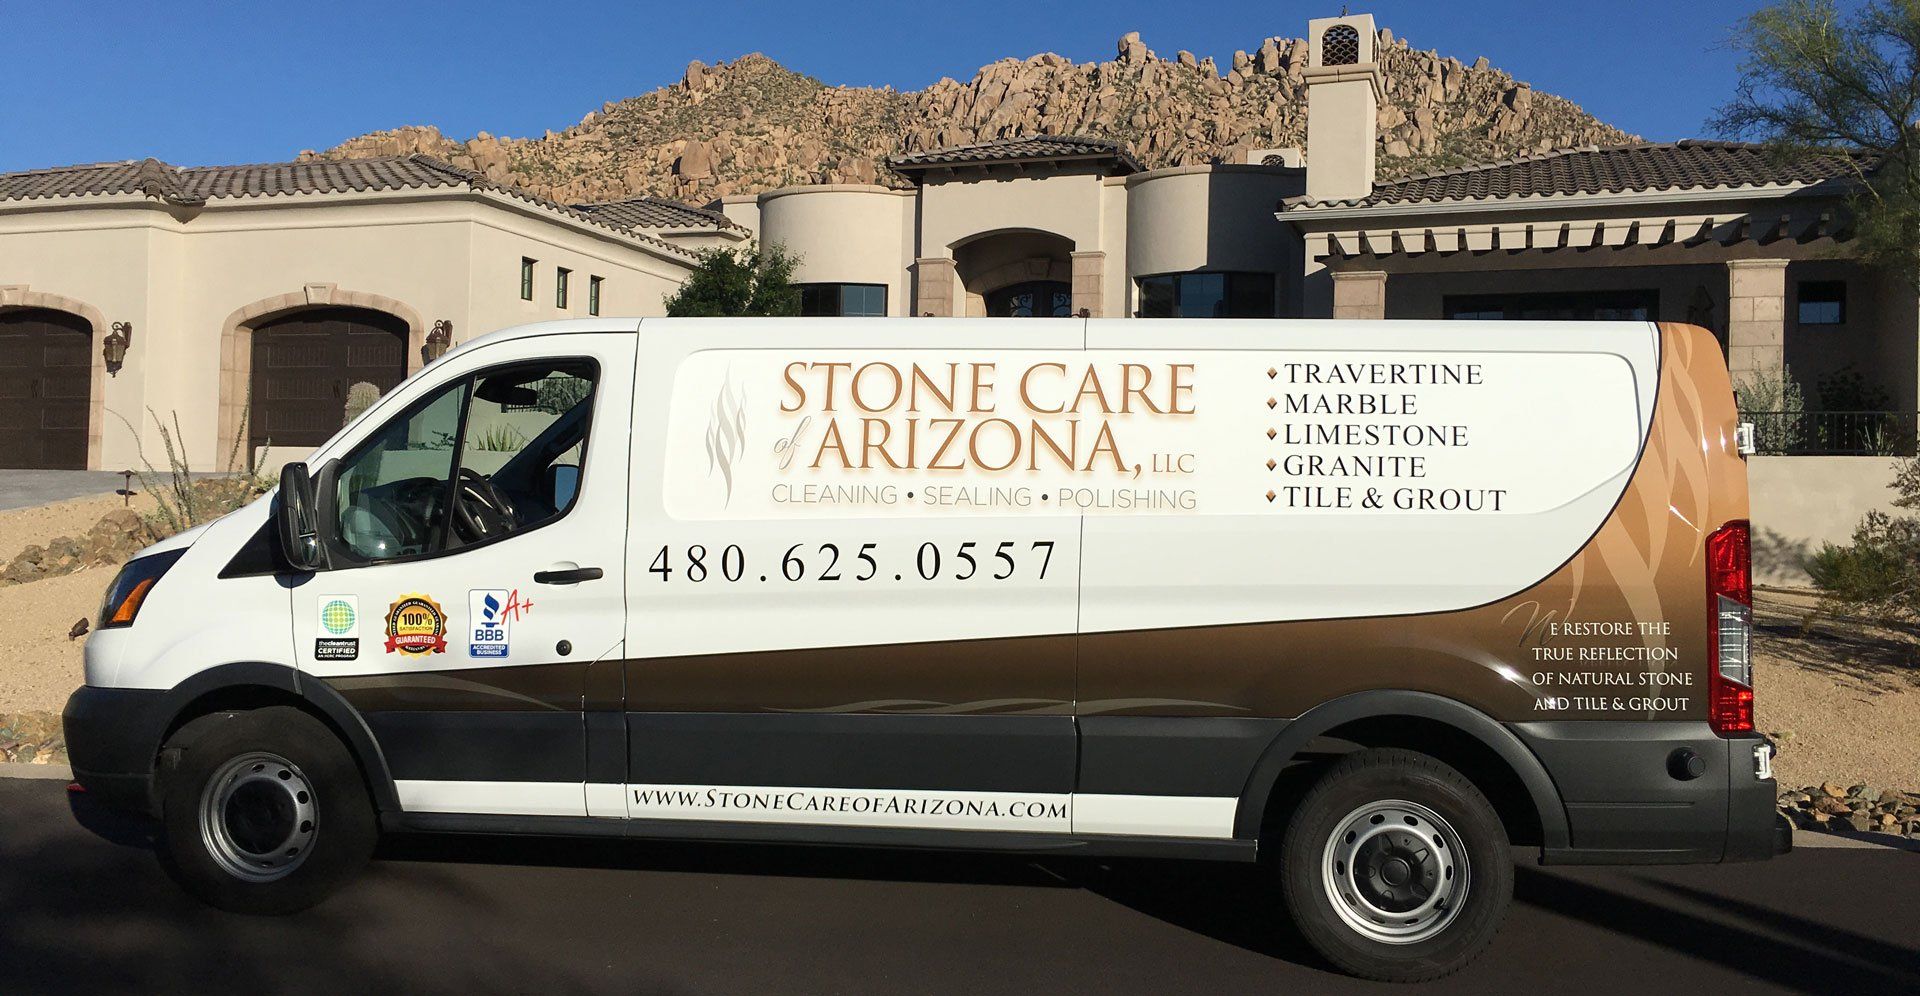 Why Choose Sone Care of Arizona